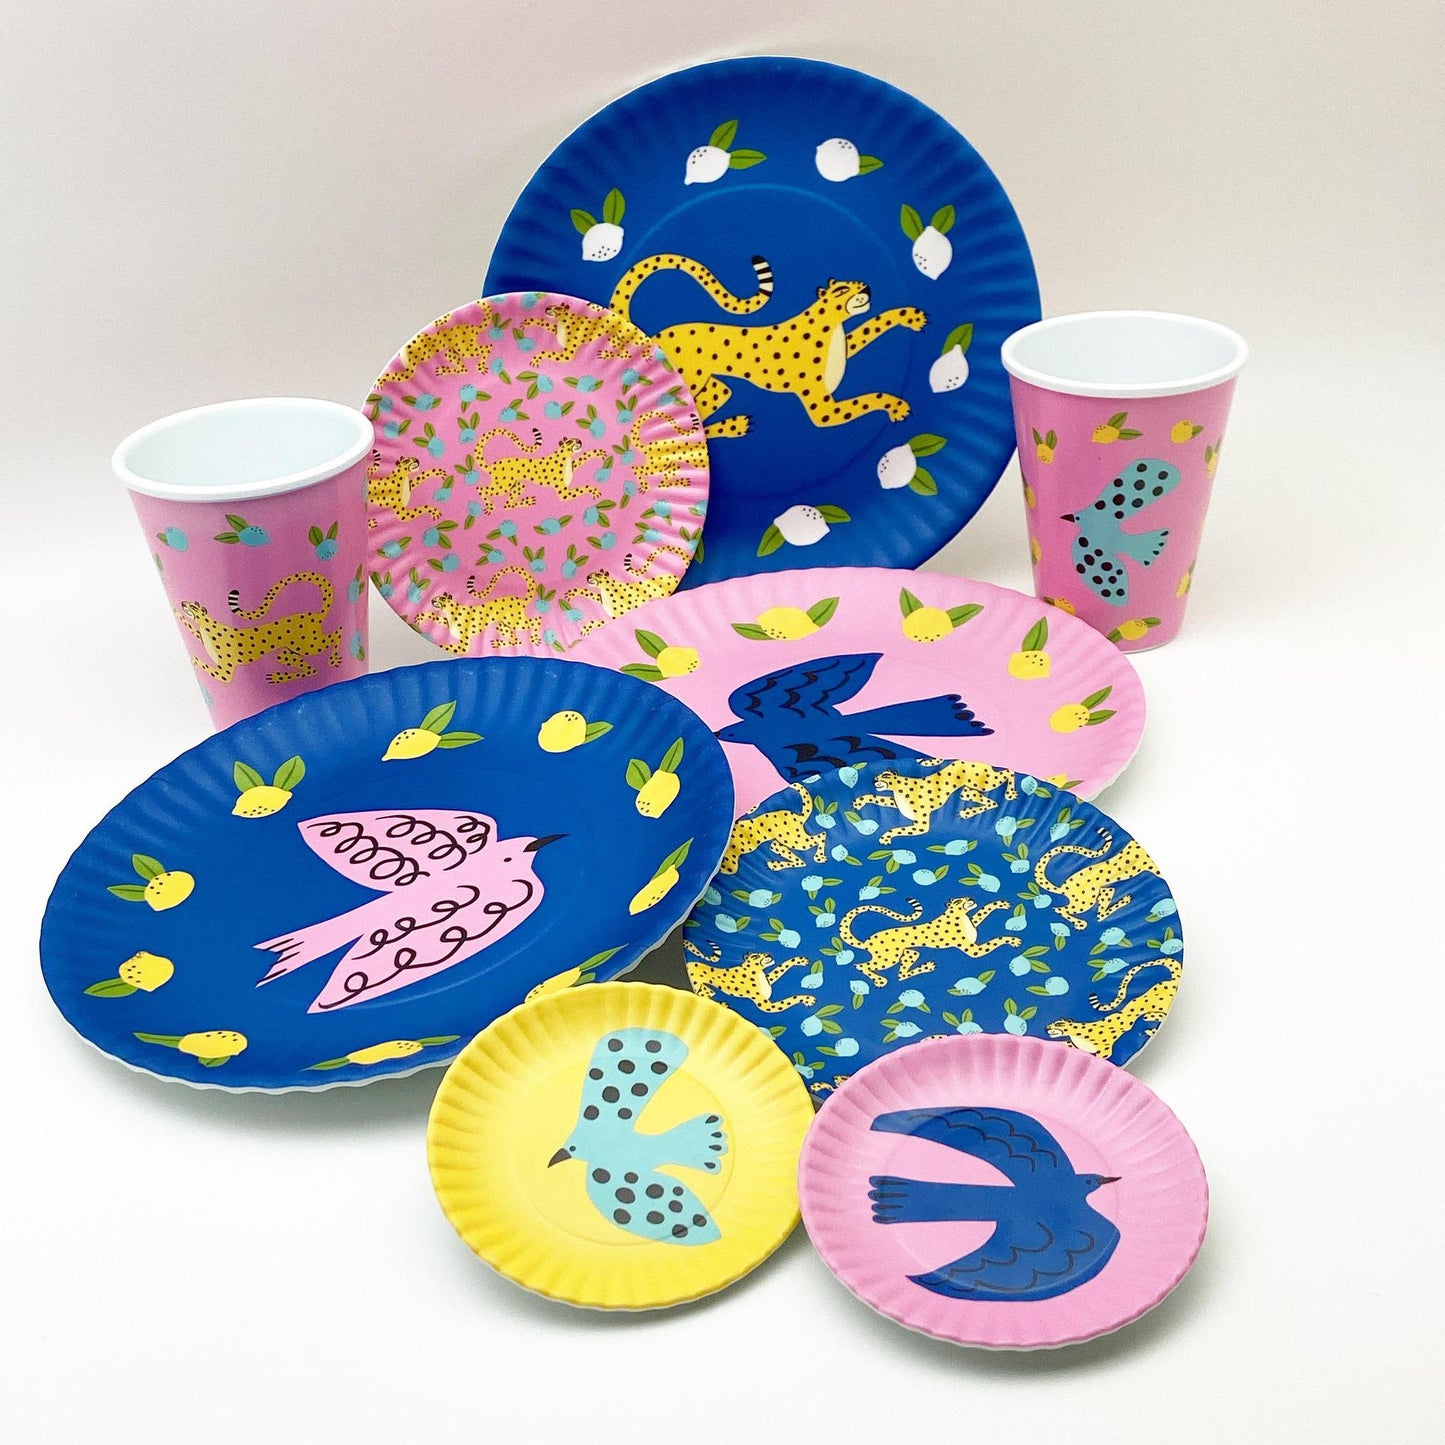 Coaster/Tidbit Tray - Melamine "Paper Plate" - Bird on Pink